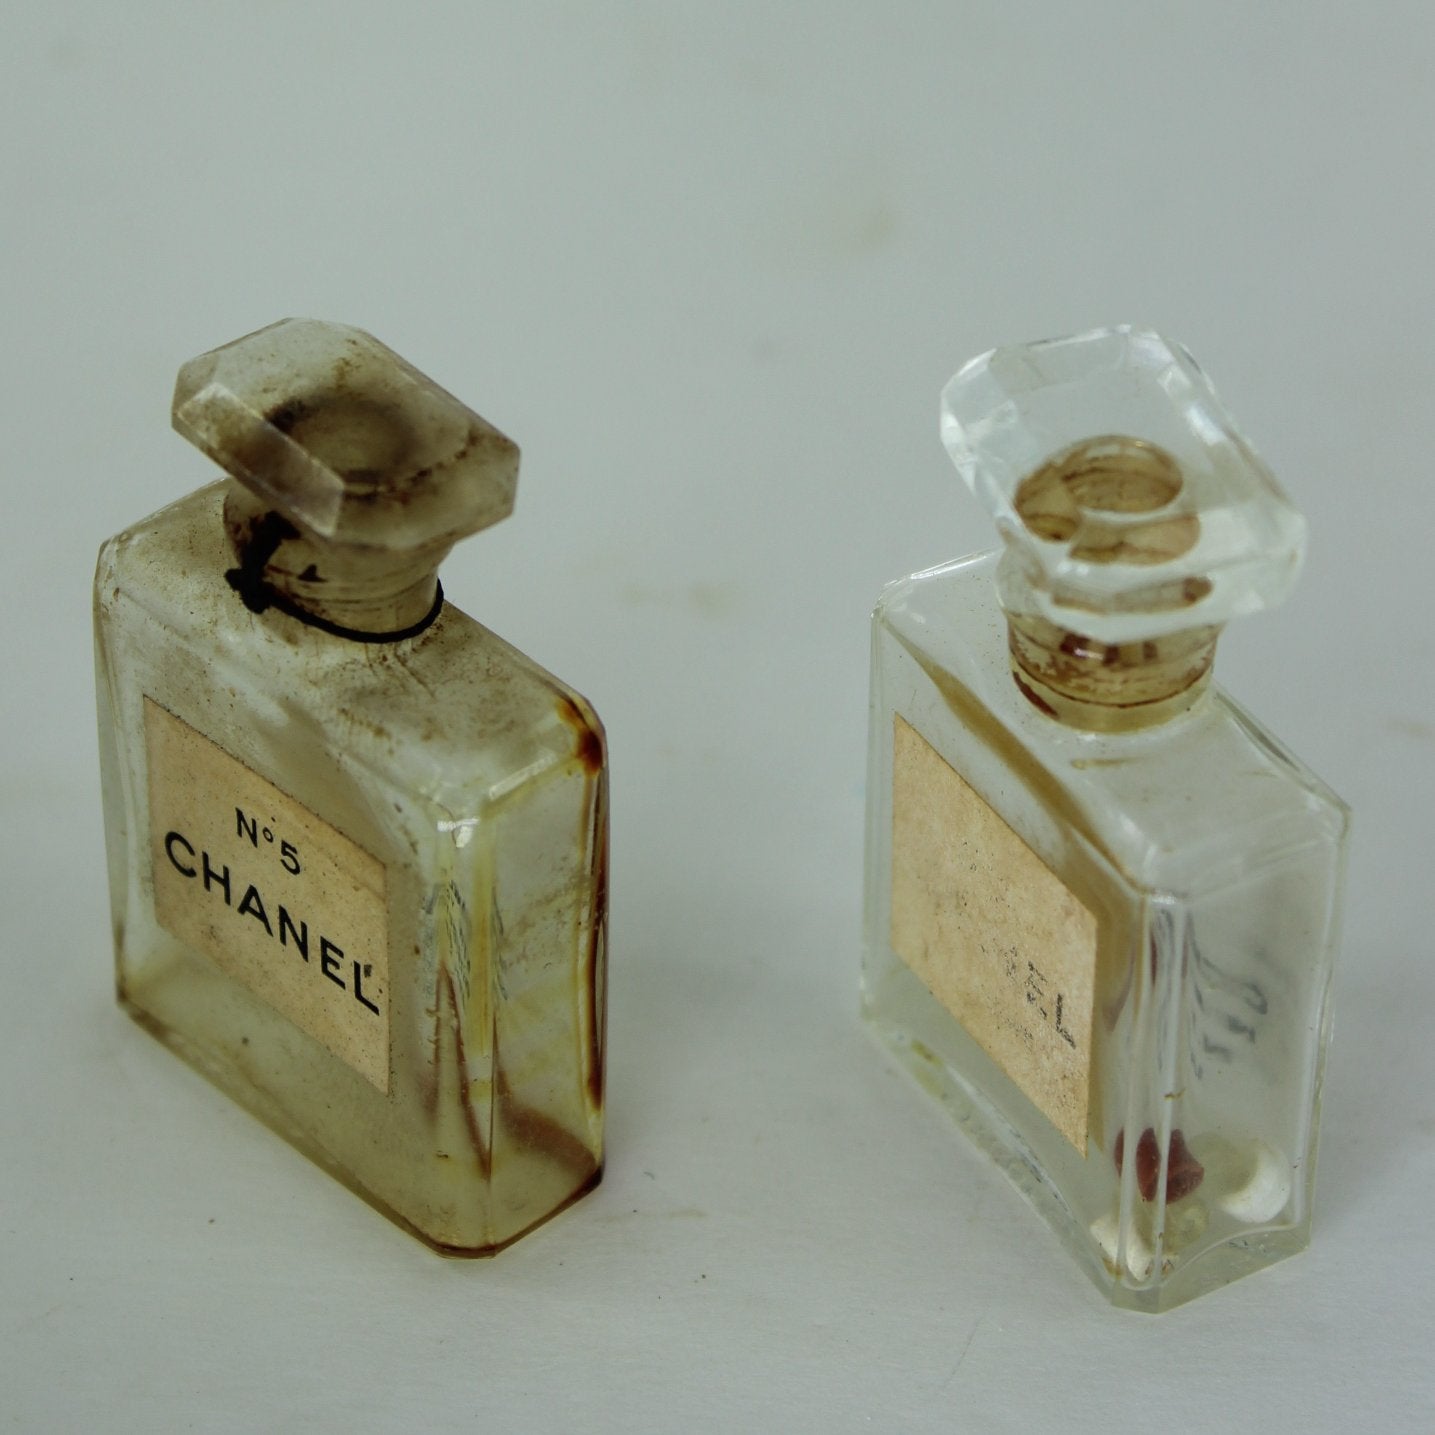 chanel chanel no 5 perfume